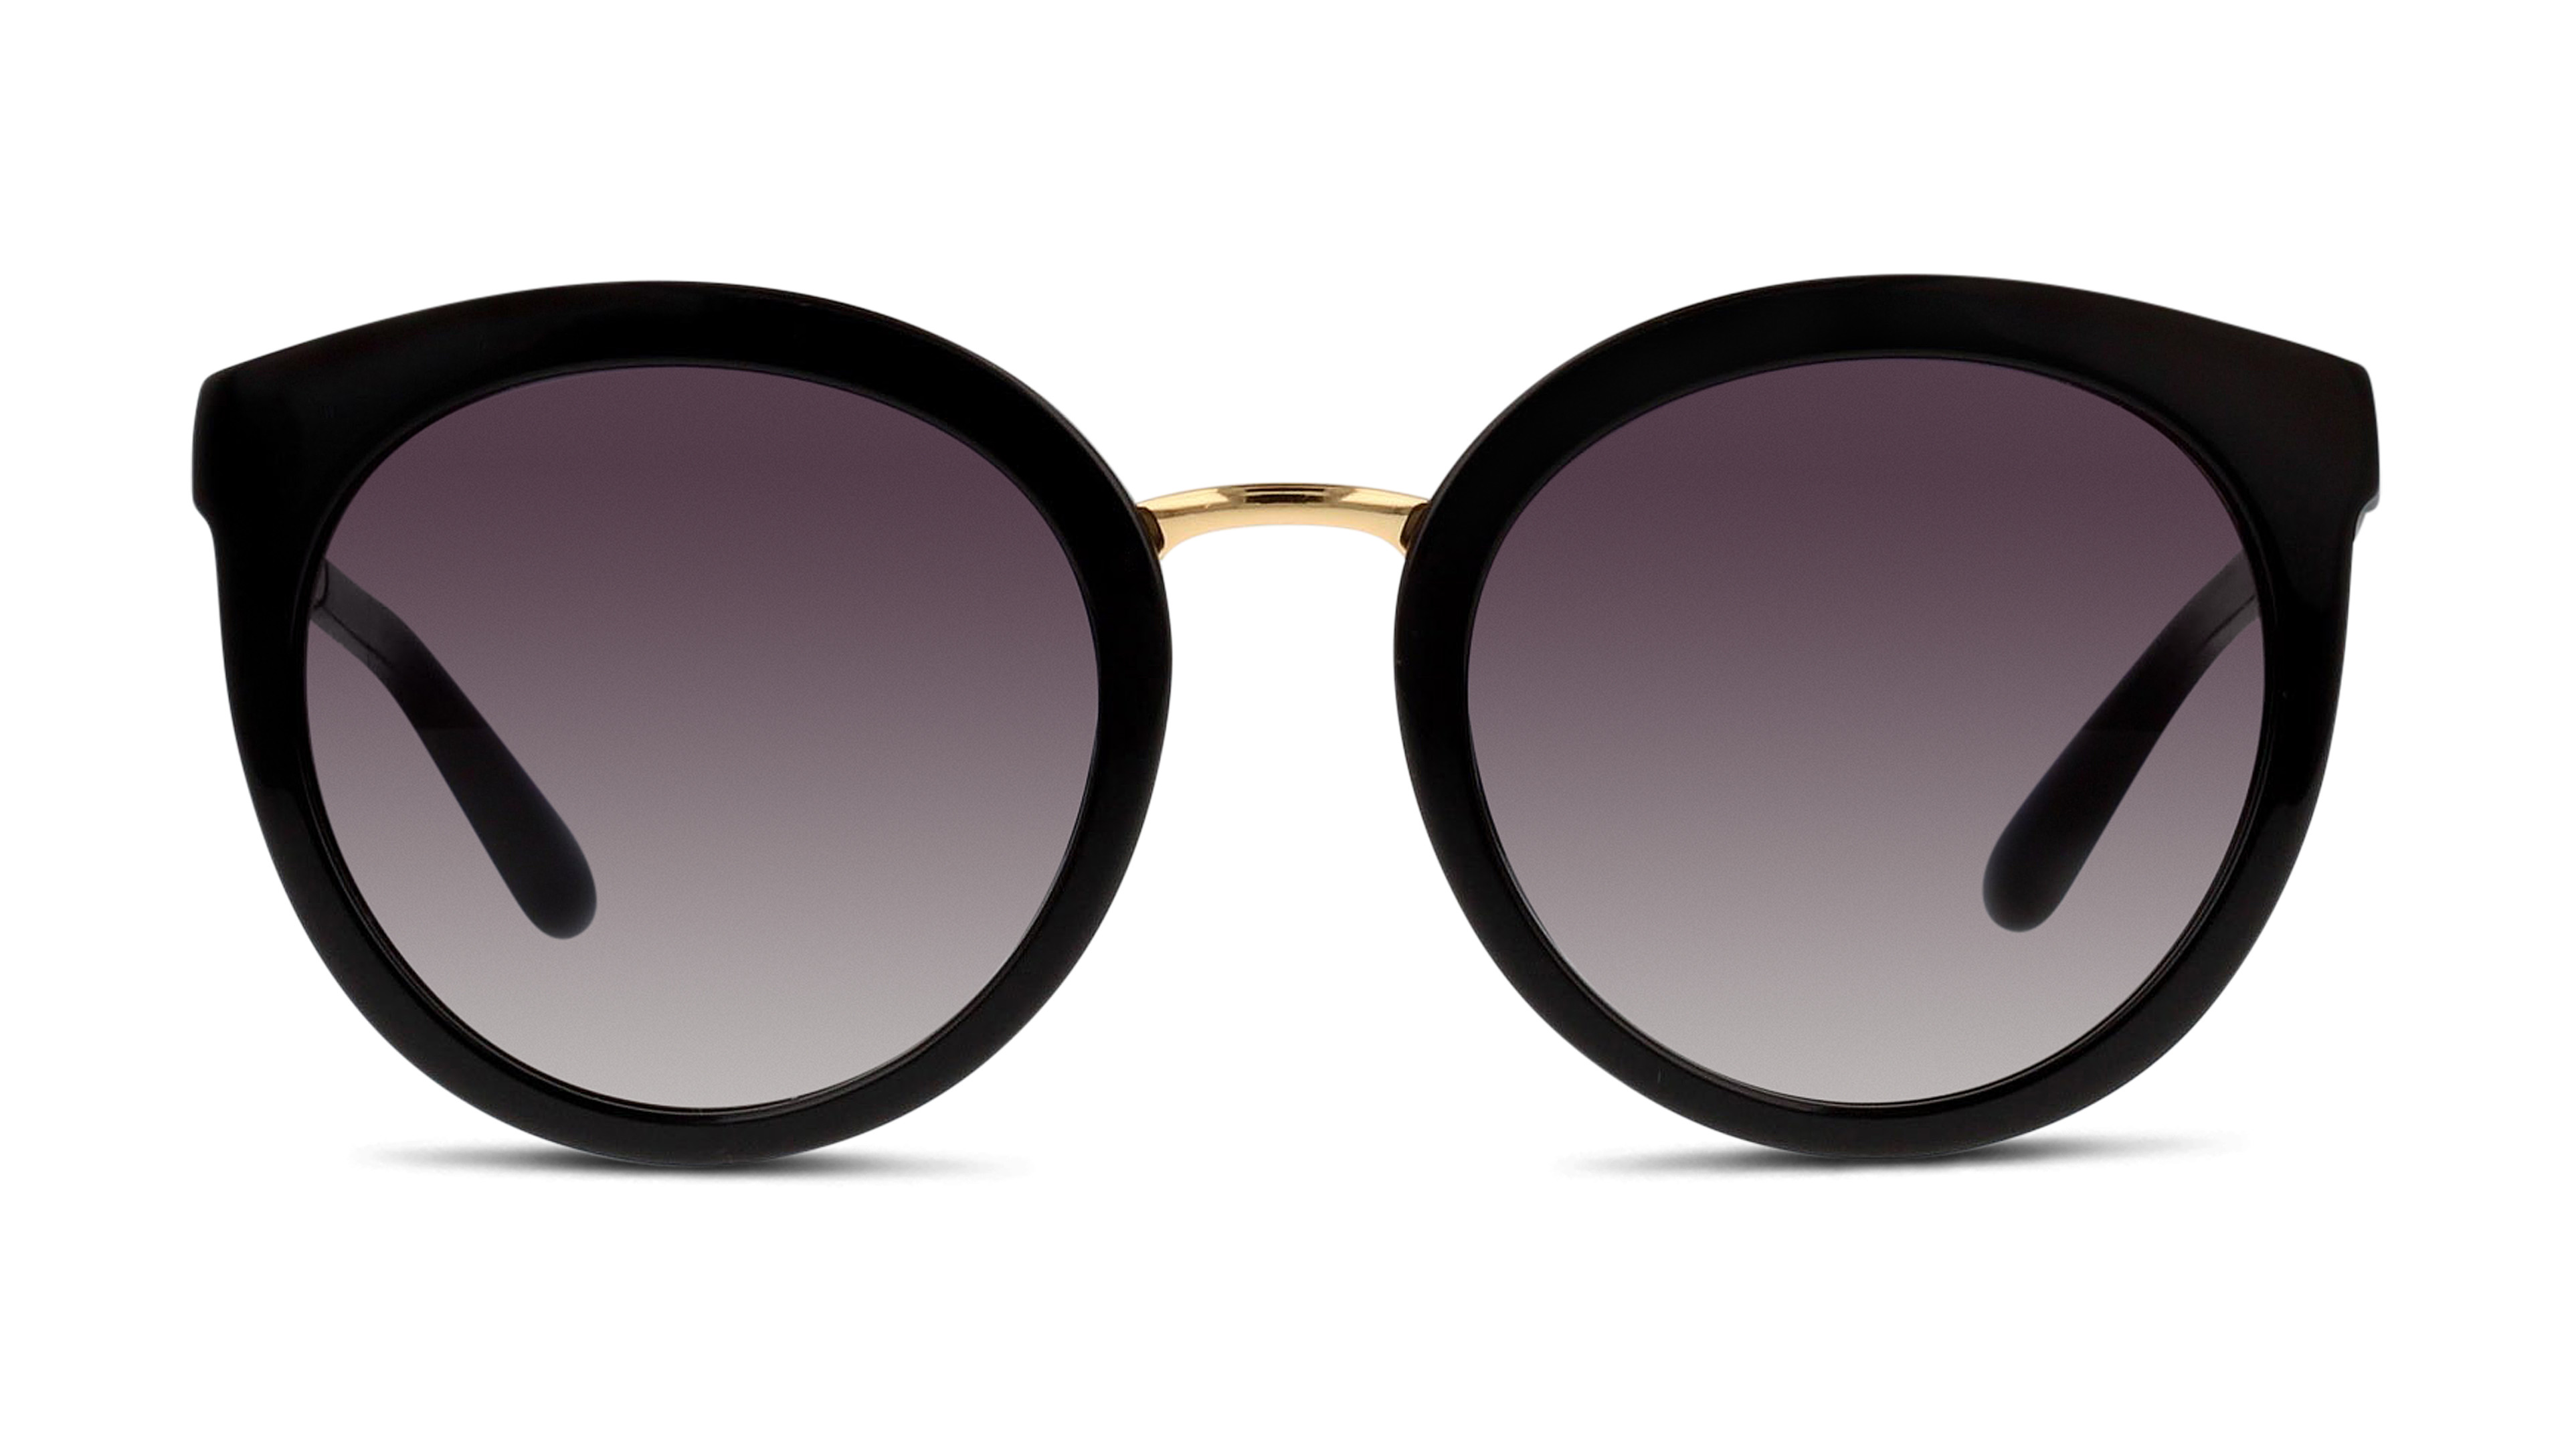 [products.image.front] Dolce&Gabbana 0DG4268 501/8G Sonnenbrille